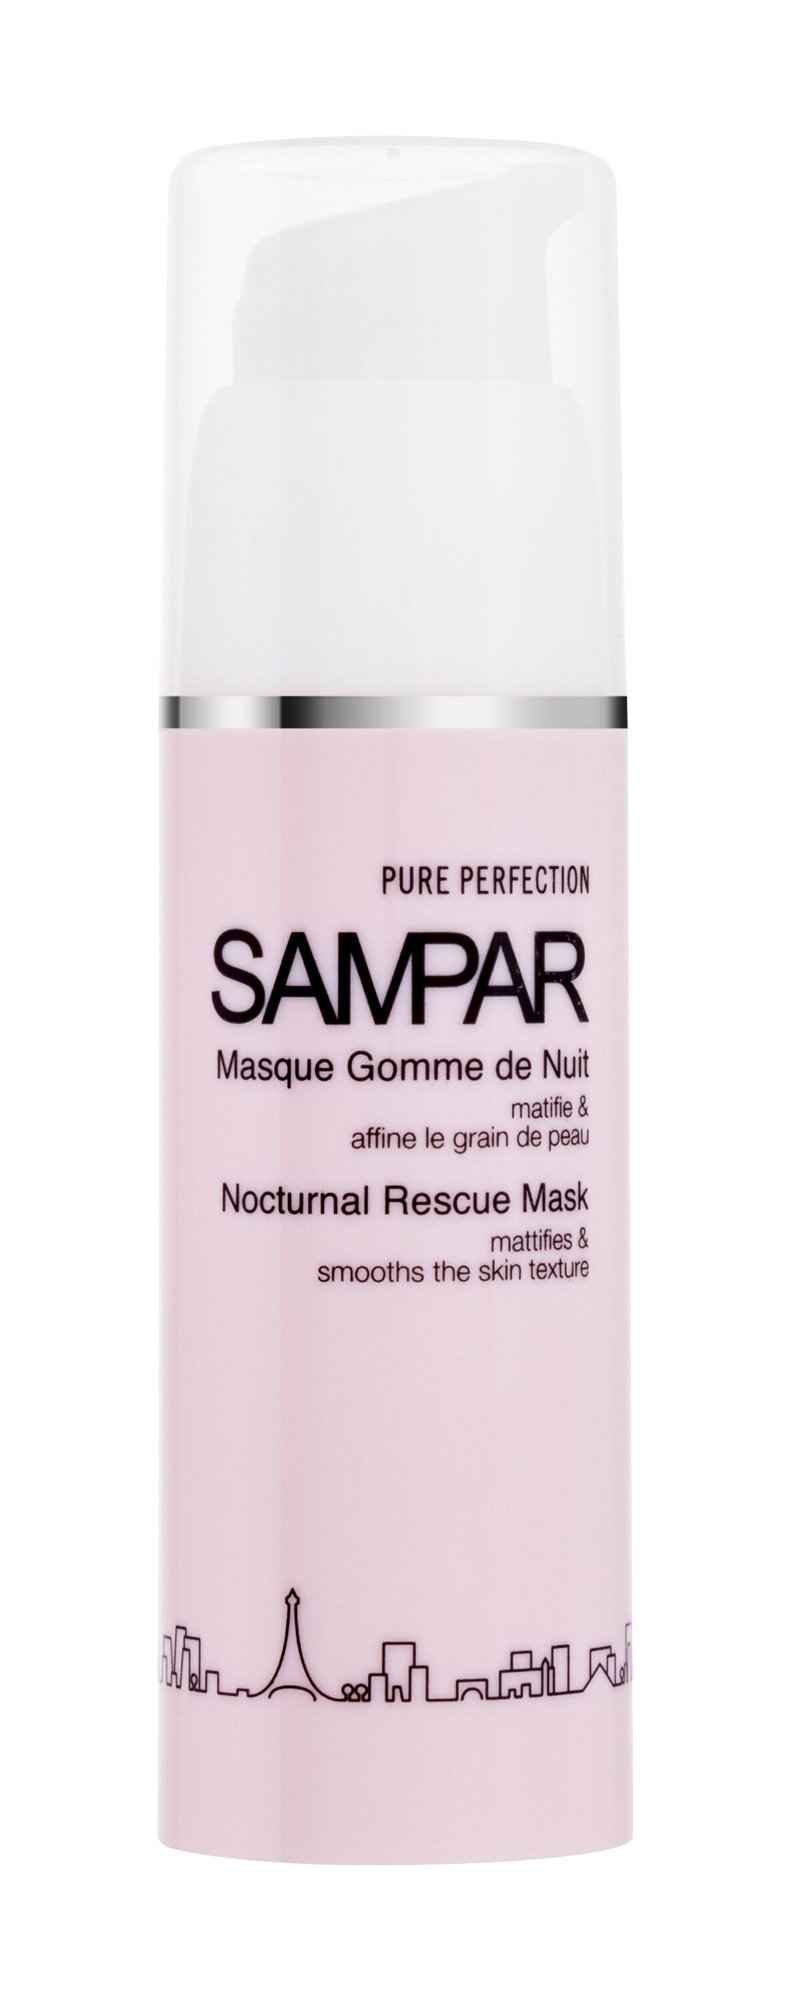 Sampar Pure Perfection Nocturnal Rescue Mask Veido kaukė